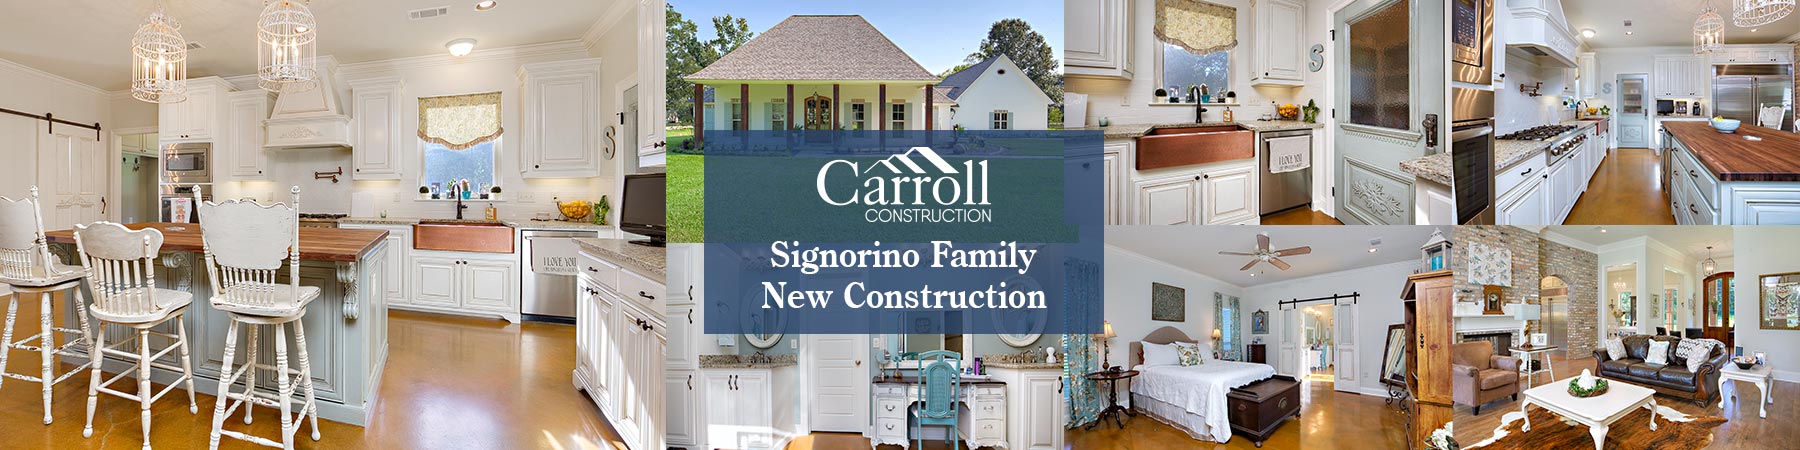 Signorino Family New Construction Project